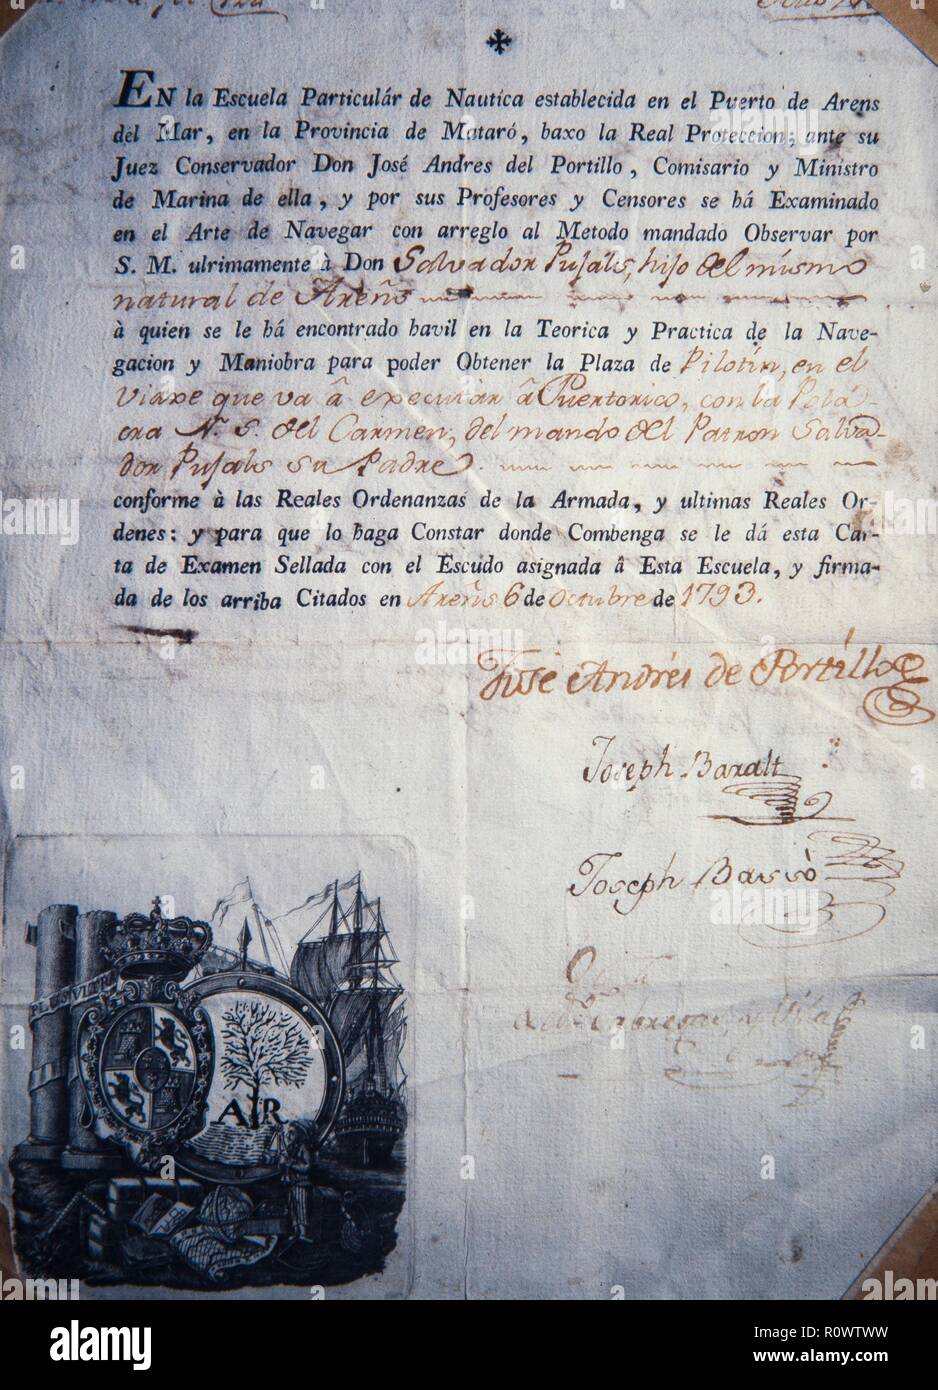 Titulo en el arte de navegar, archivo municipal Arenys de Mar, Barcelona 1779. Stock Photo